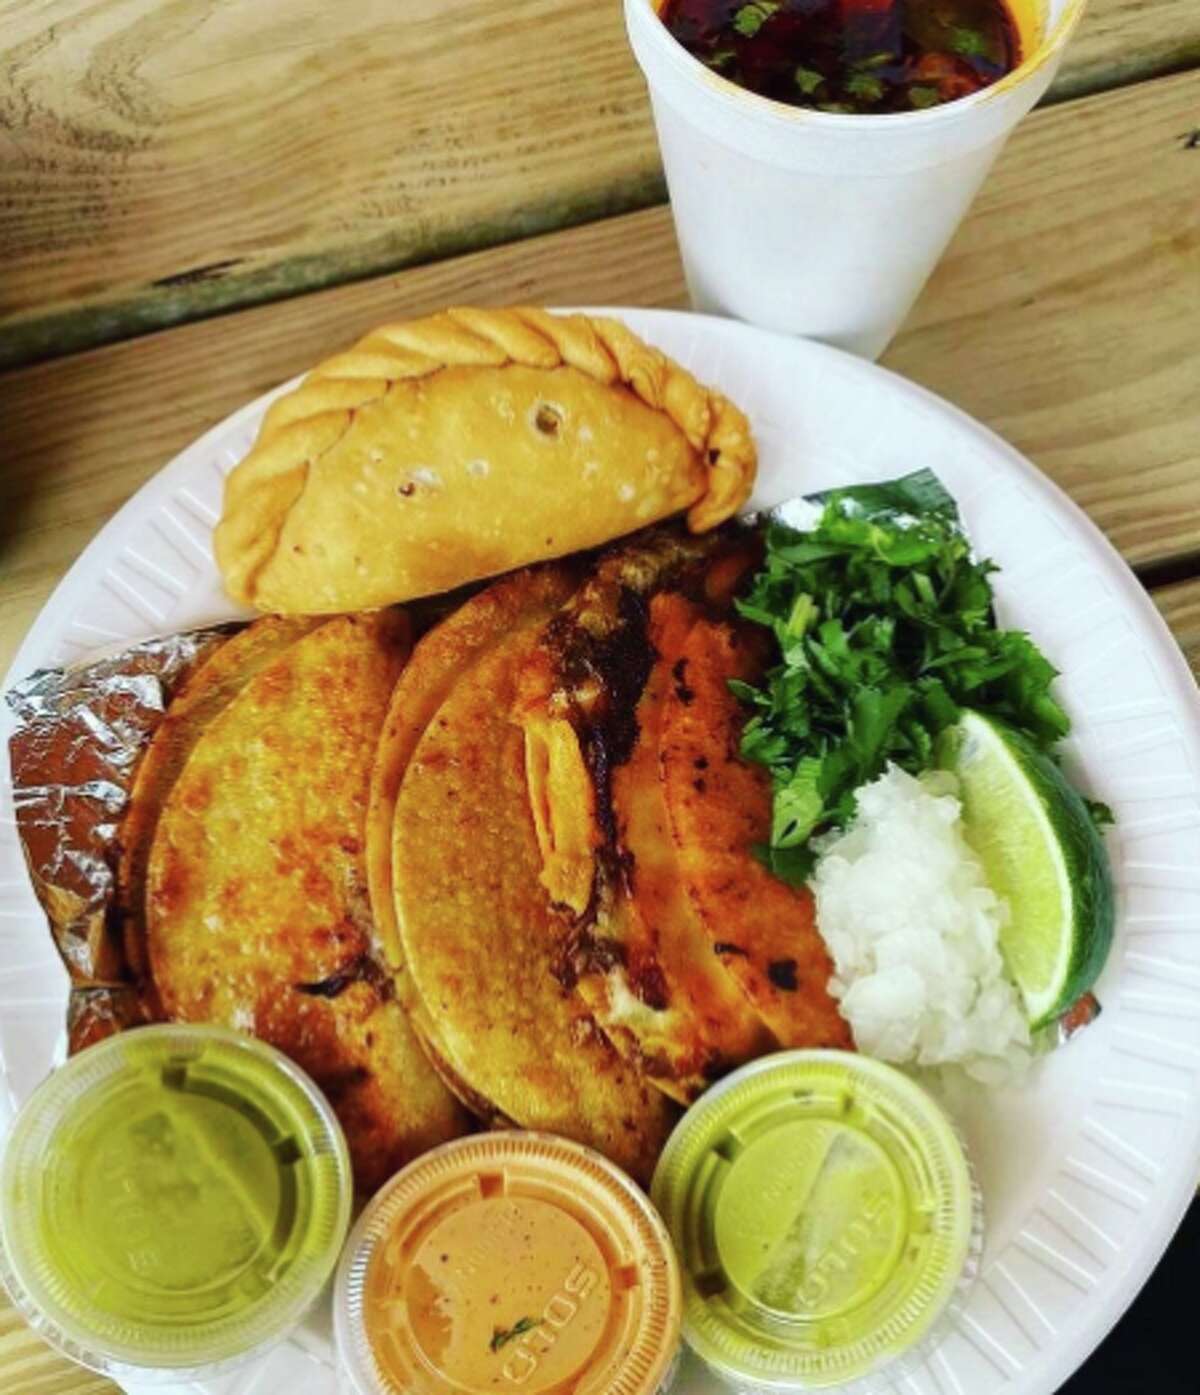 Here are all the empanadas you'll find around San Antonio.